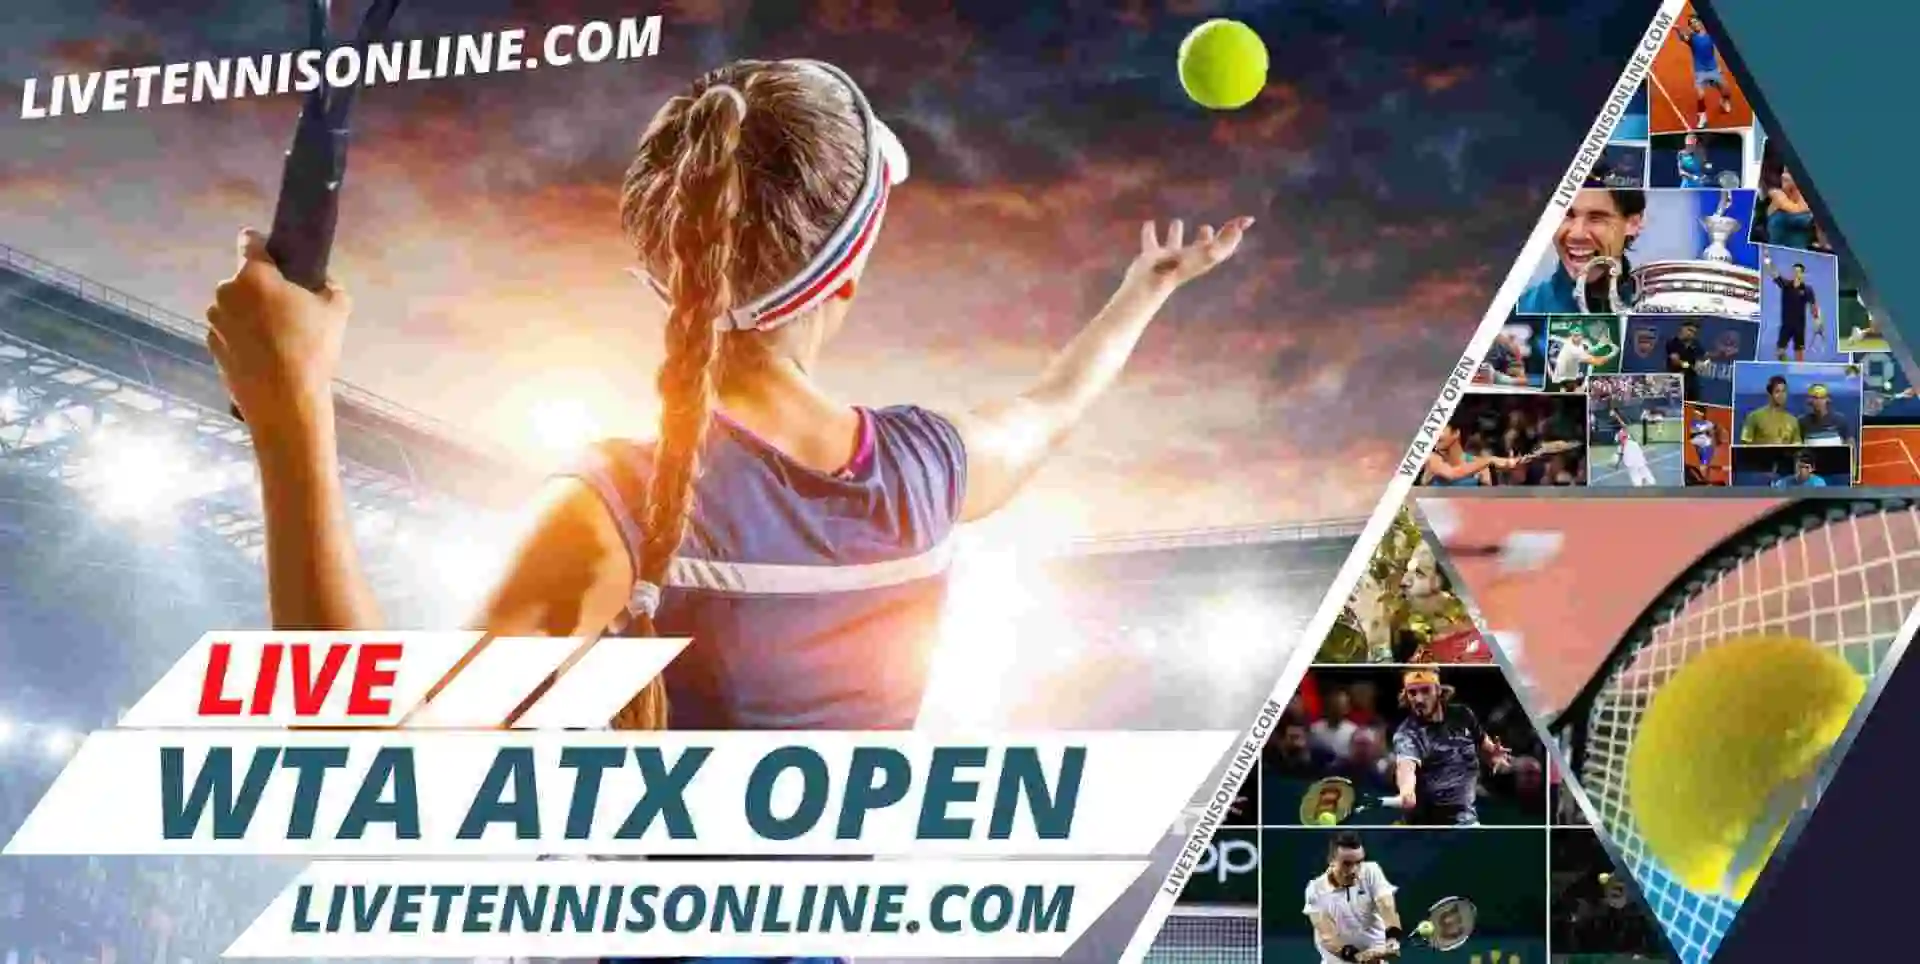 Live Stream ATX Open Tennis